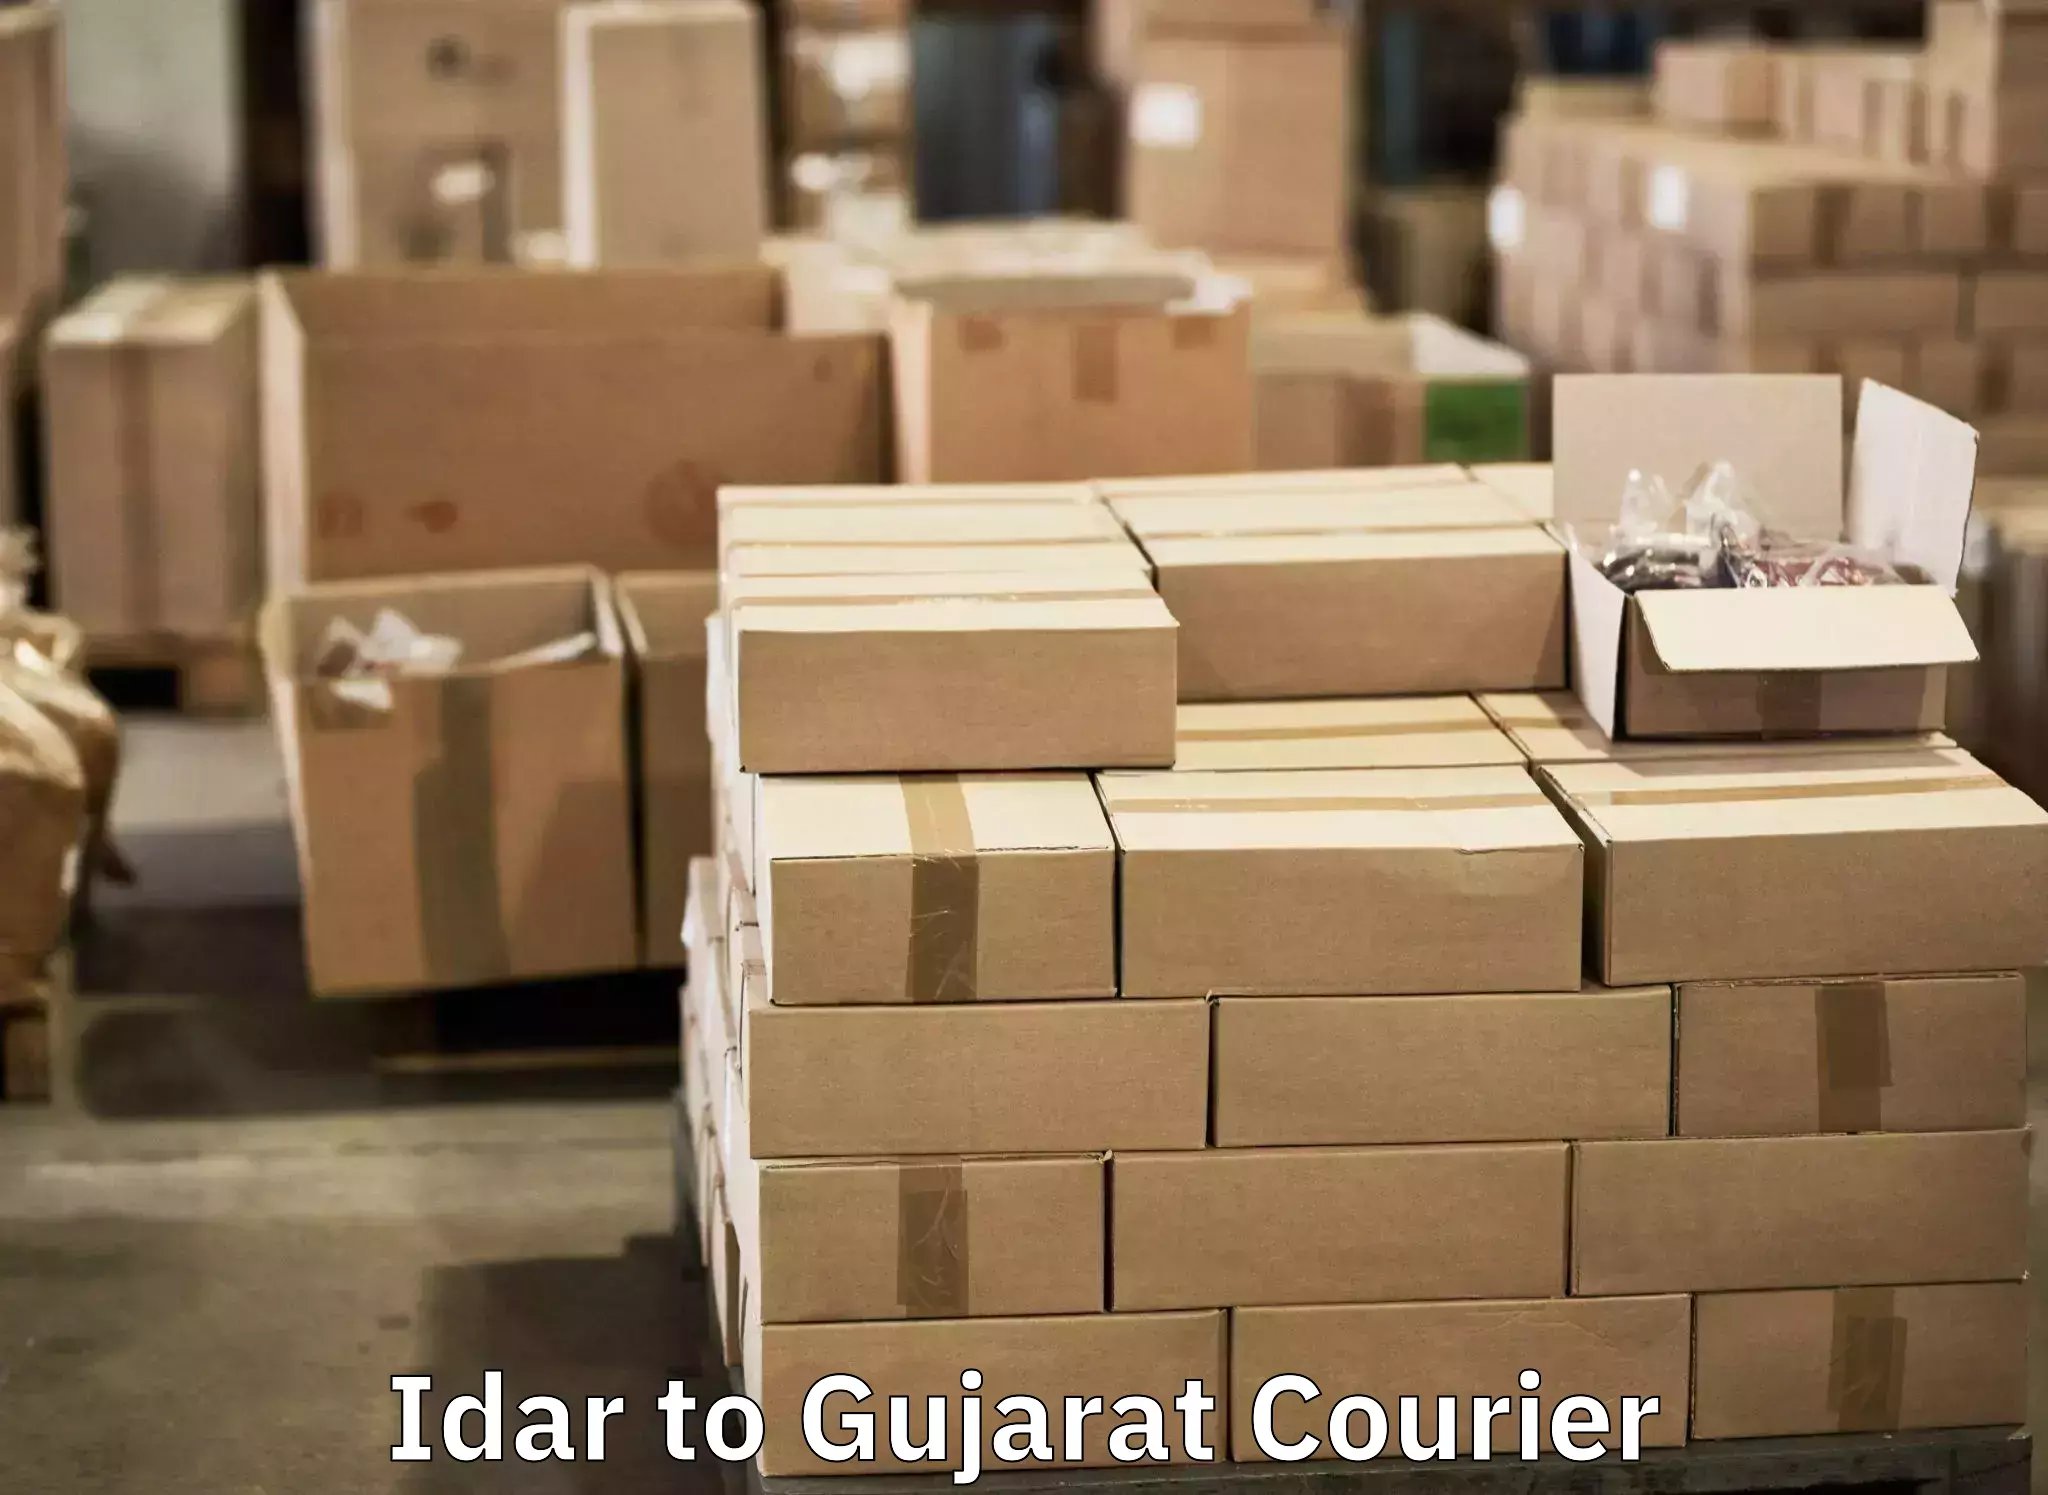 Urgent luggage shipment Idar to Idar